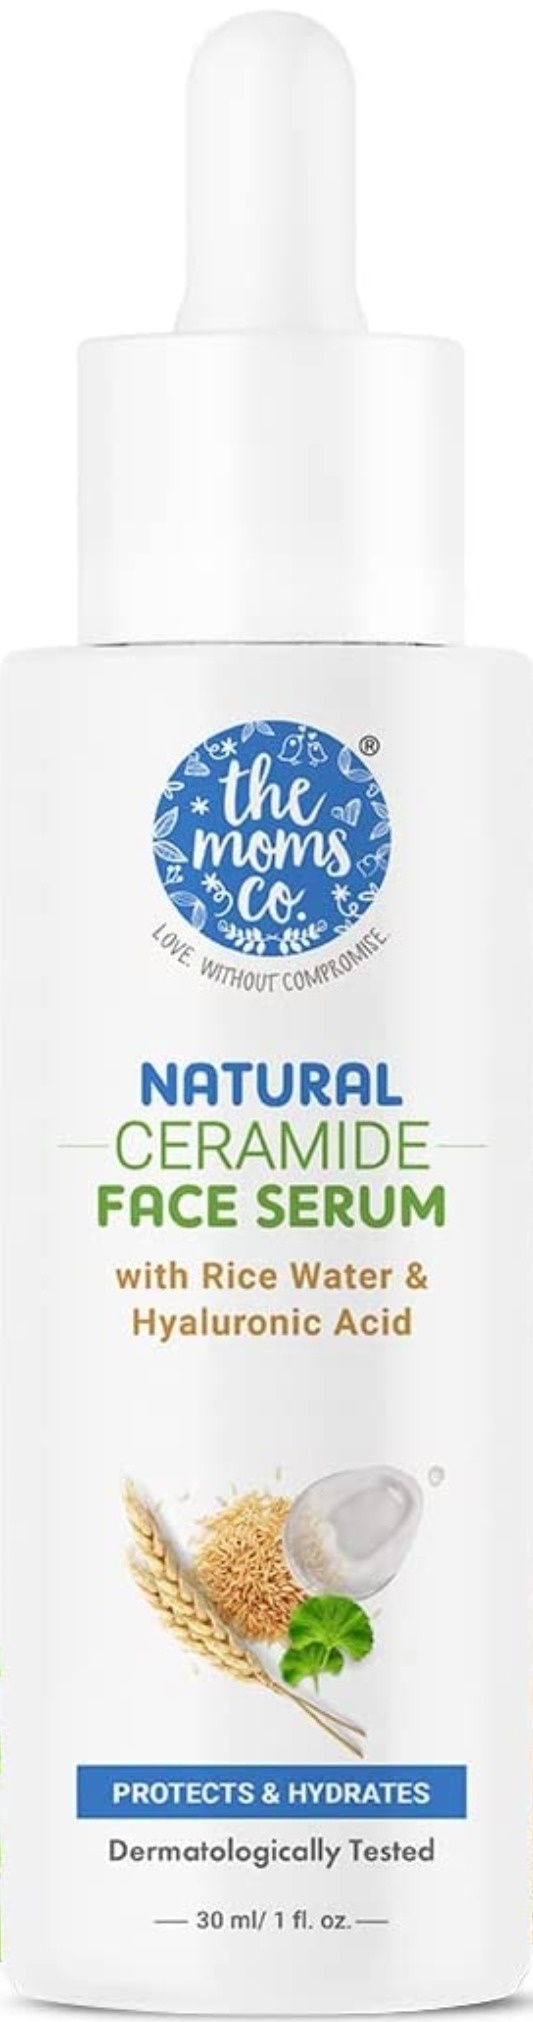 The Mom's Co. Natural Ceramide Face Serum